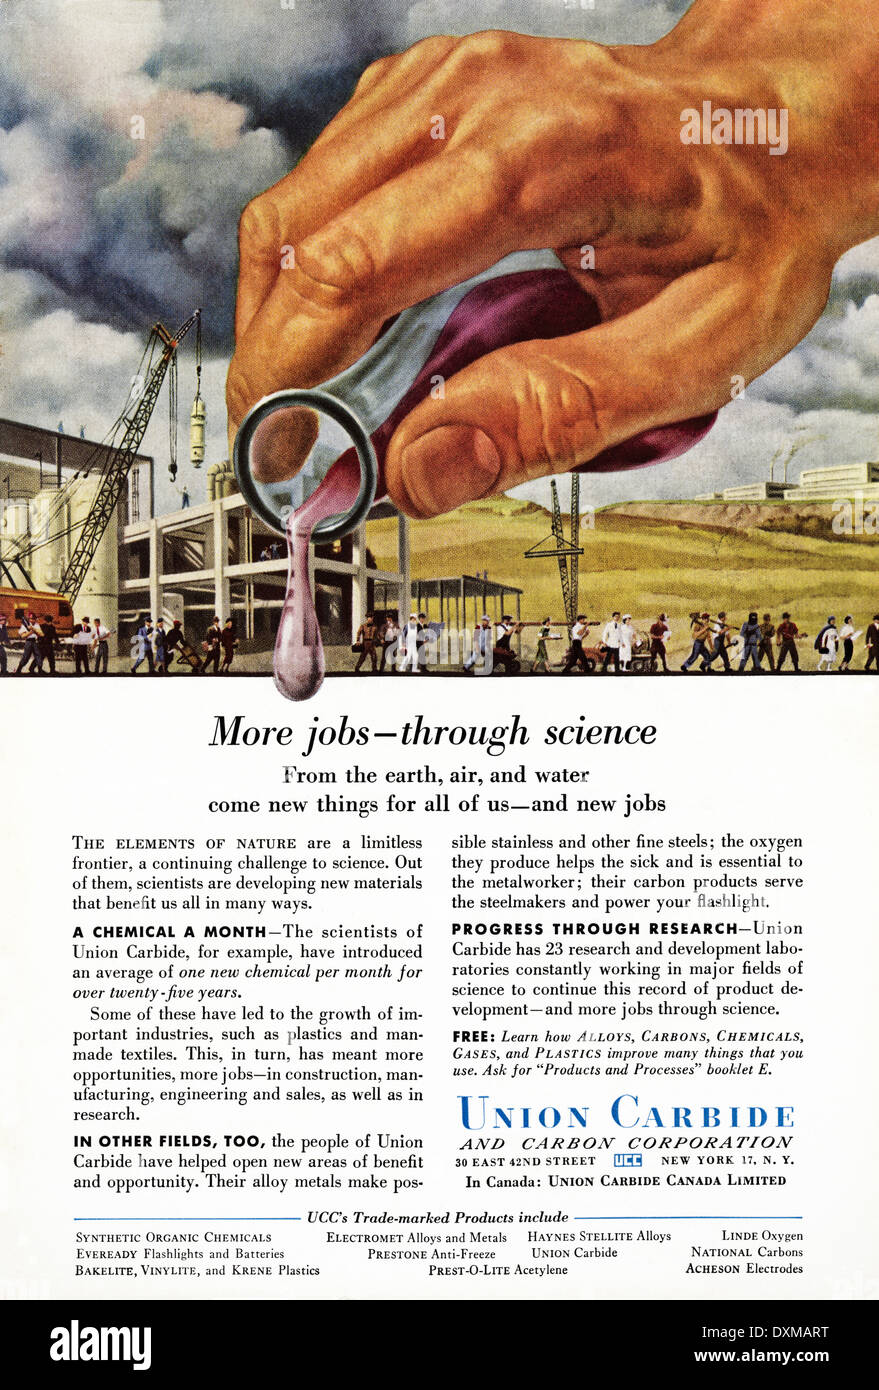 1950s-advertisement-for-union-carbide-advert-in-american-magazine-DXMART.jpg